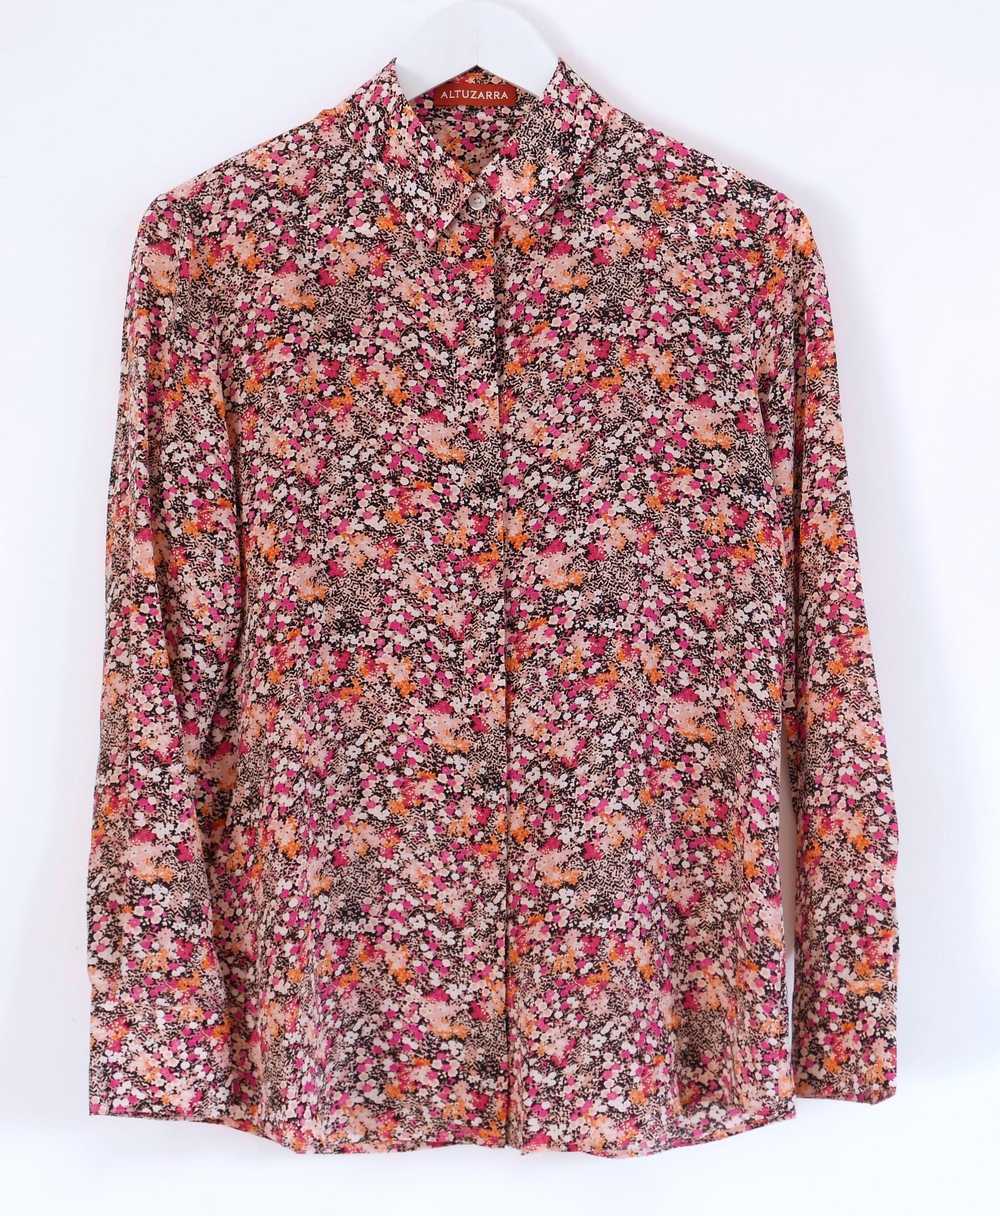 Product Details Altuzarra Floral Silk Shirt - image 2